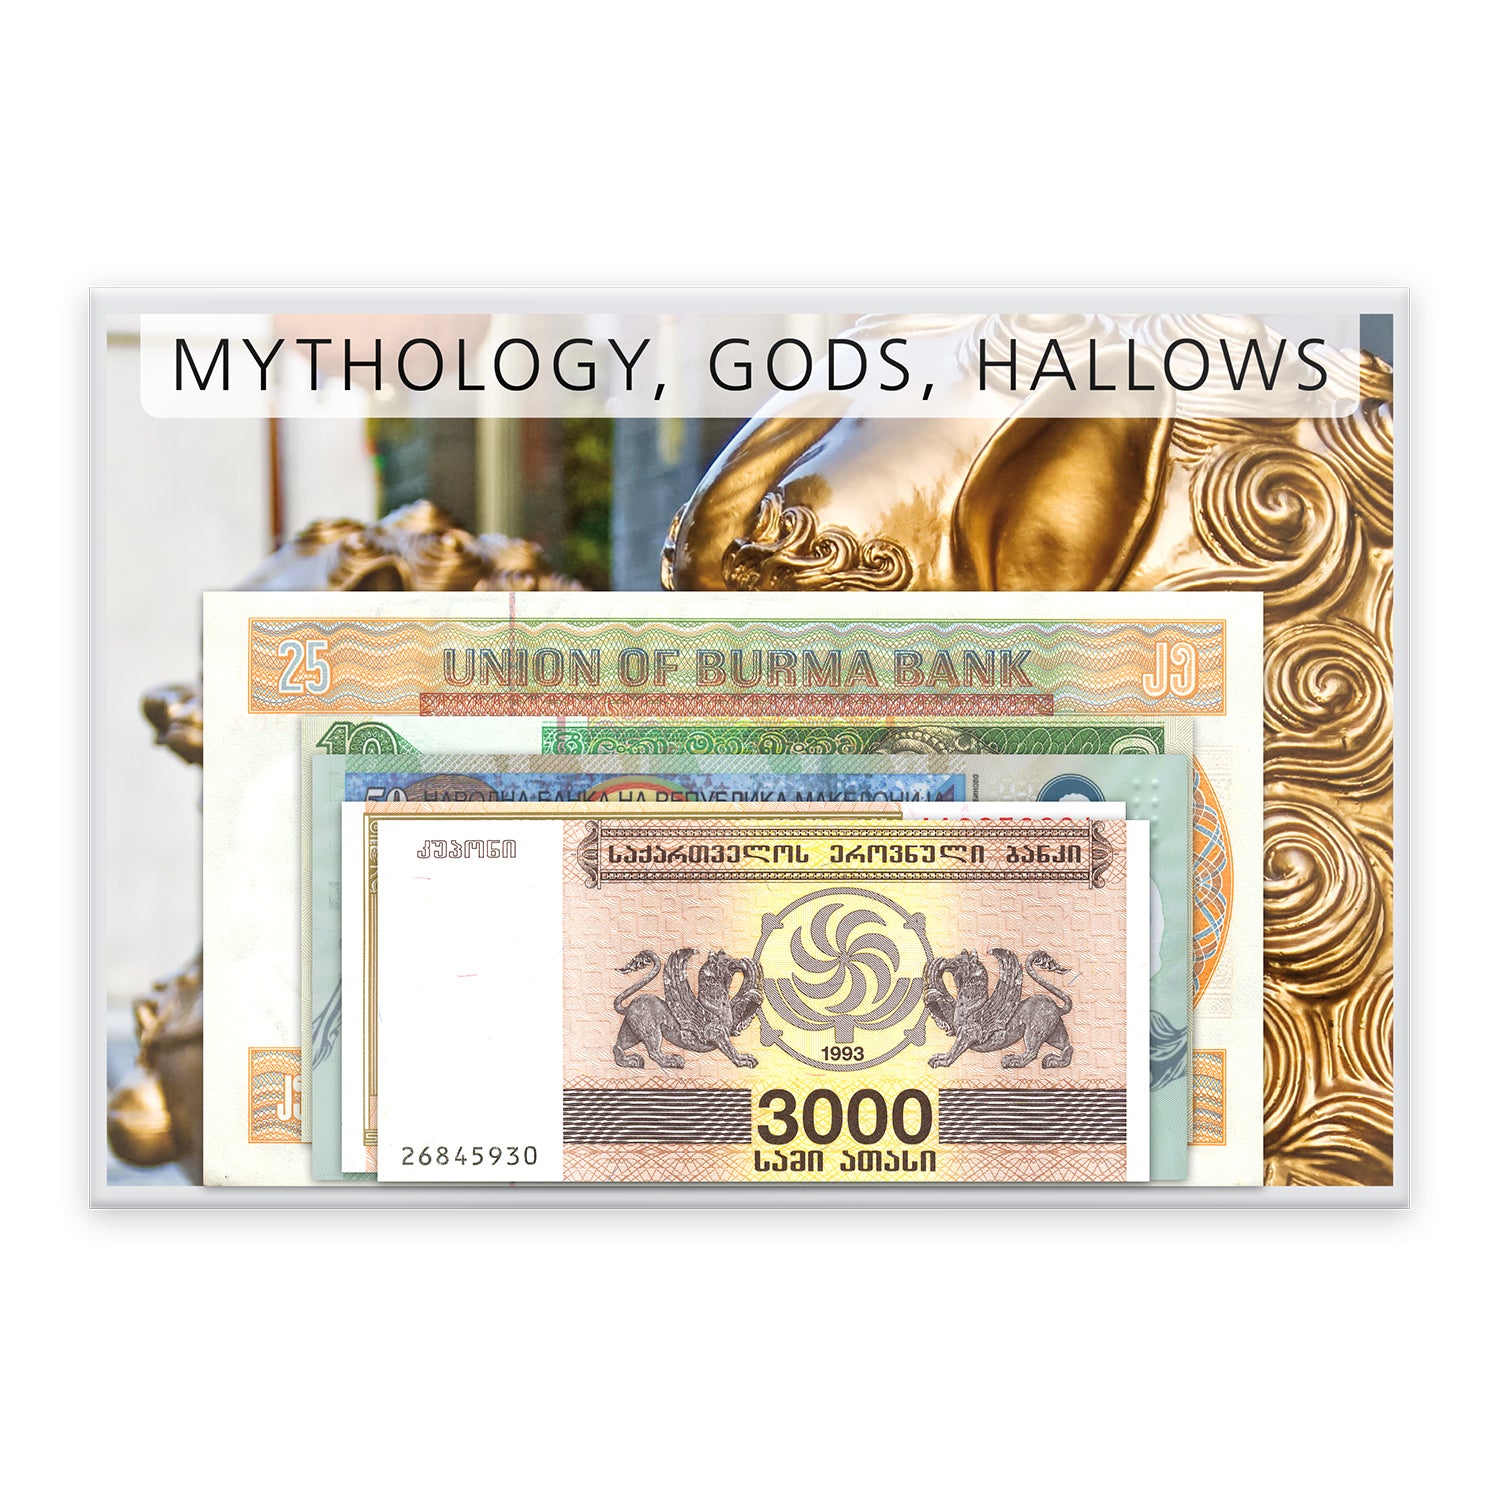 Banknote Collection "Mythology, Gods & Hallows"